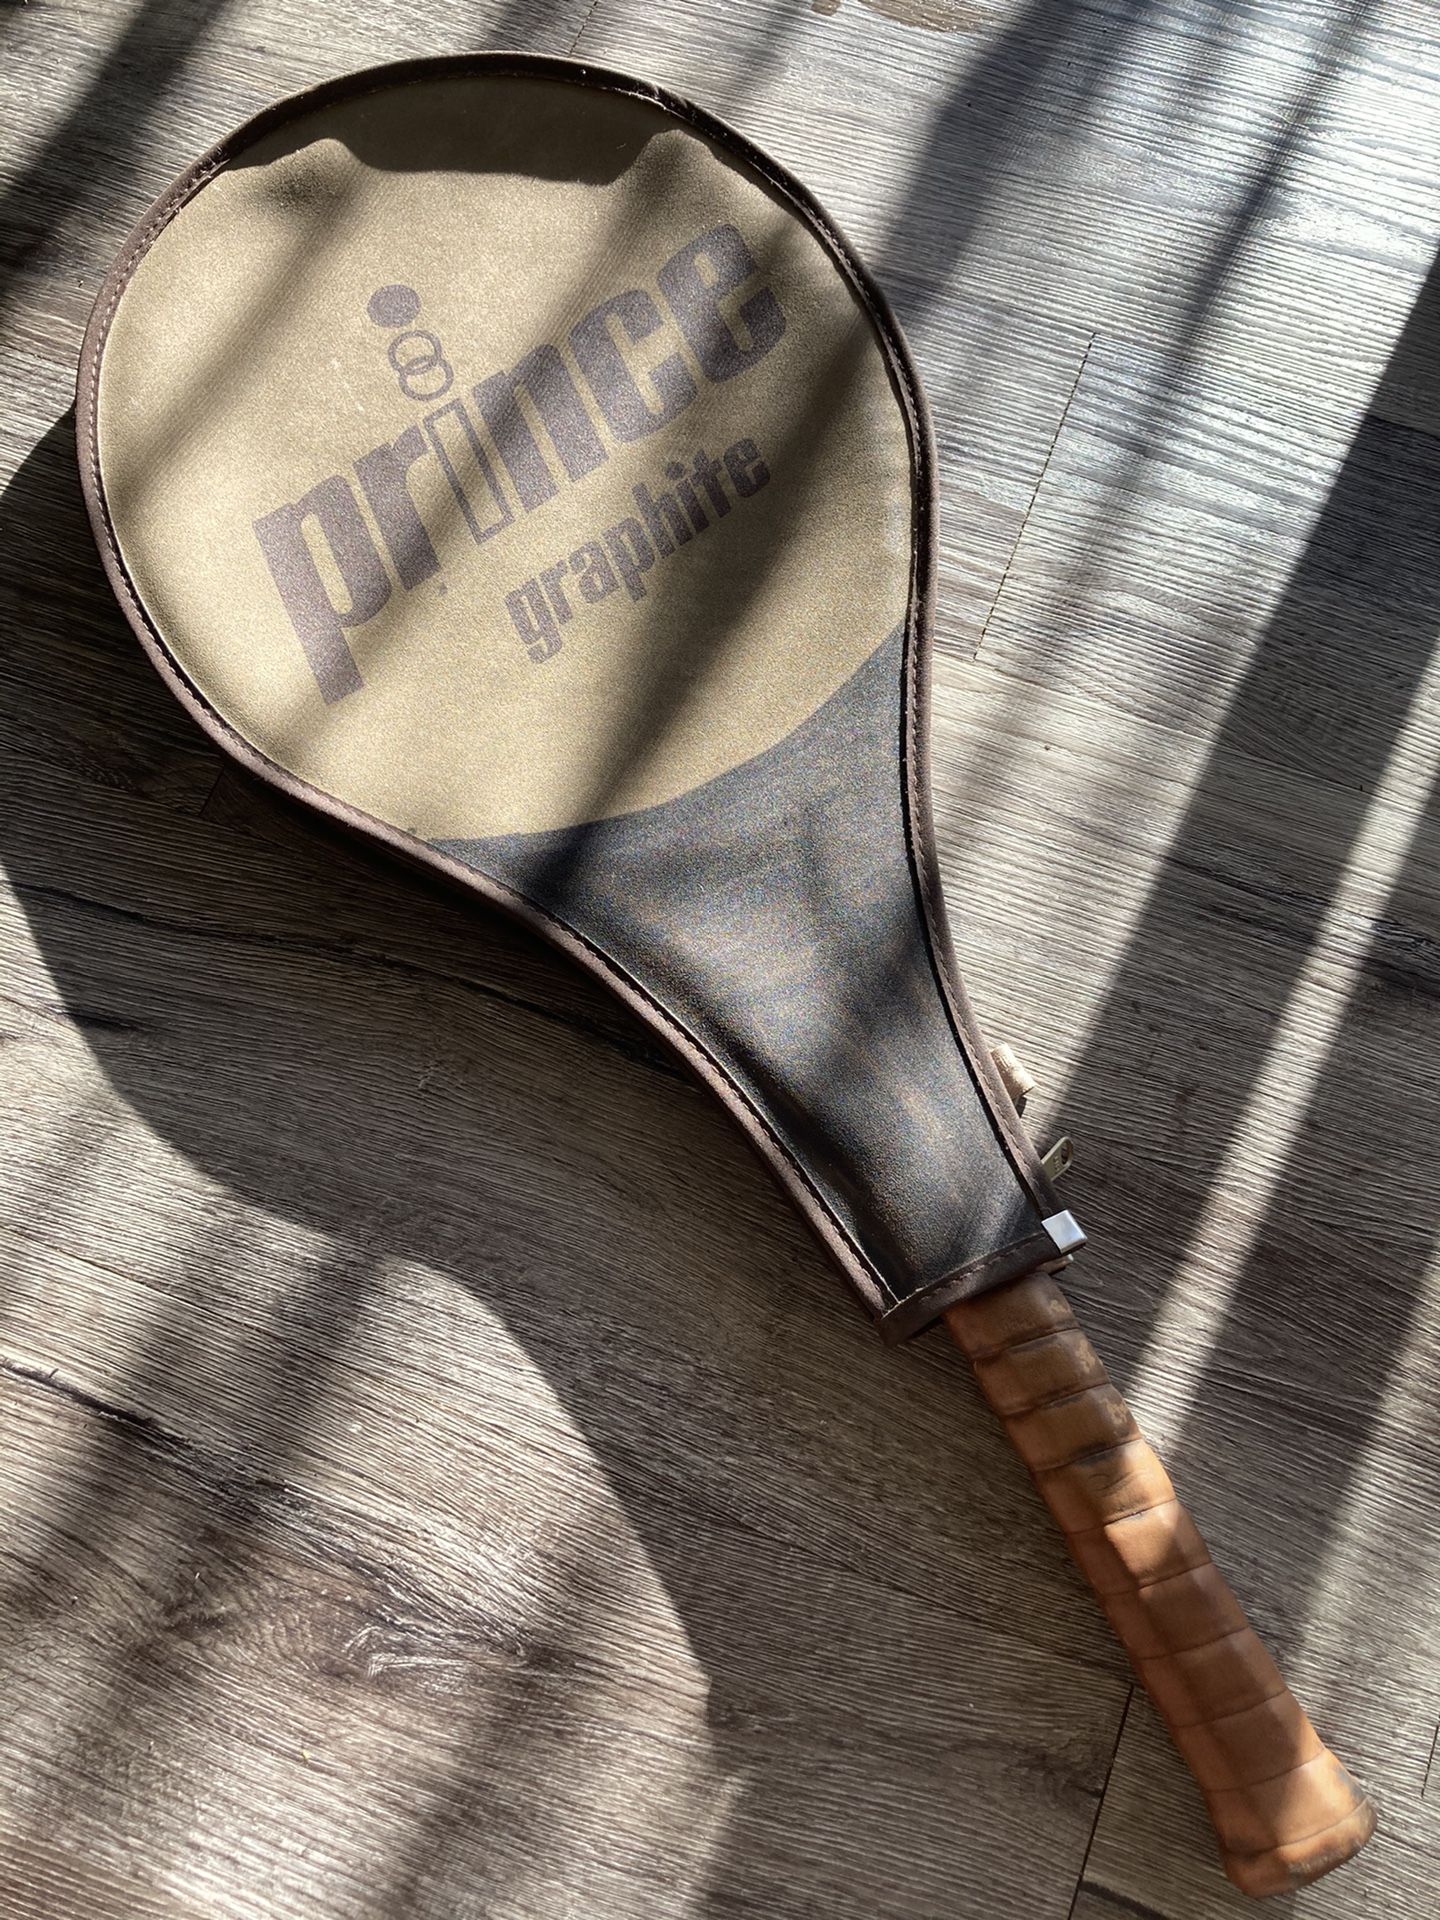 Prince graphite comp series 110 tennis racket with original zipper cover!